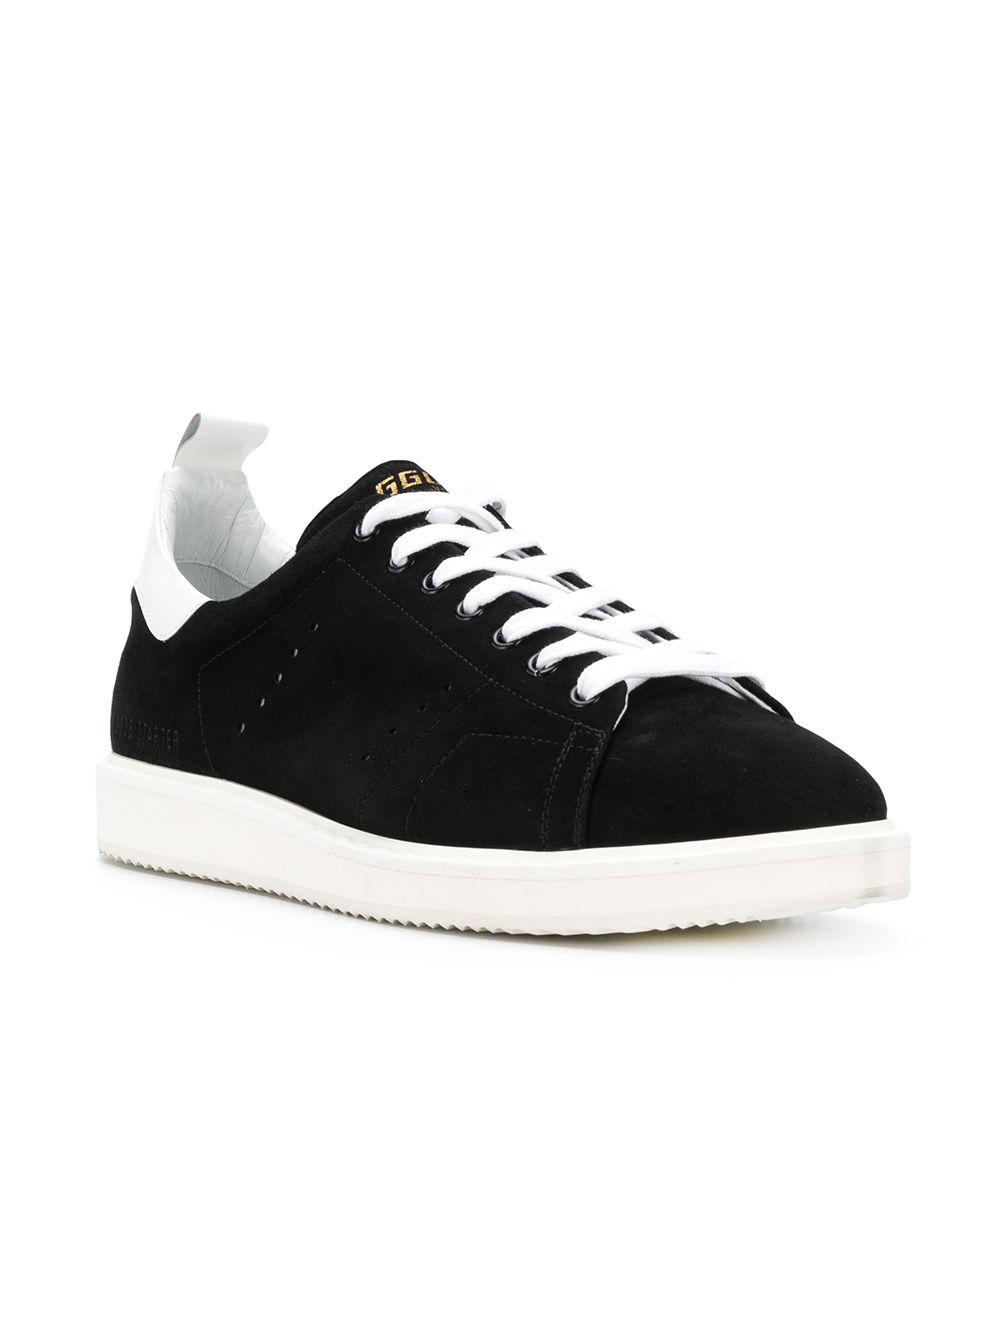 Golden Goose Deluxe Brand Leather Starter Sneakers in n3 Black Suede ...